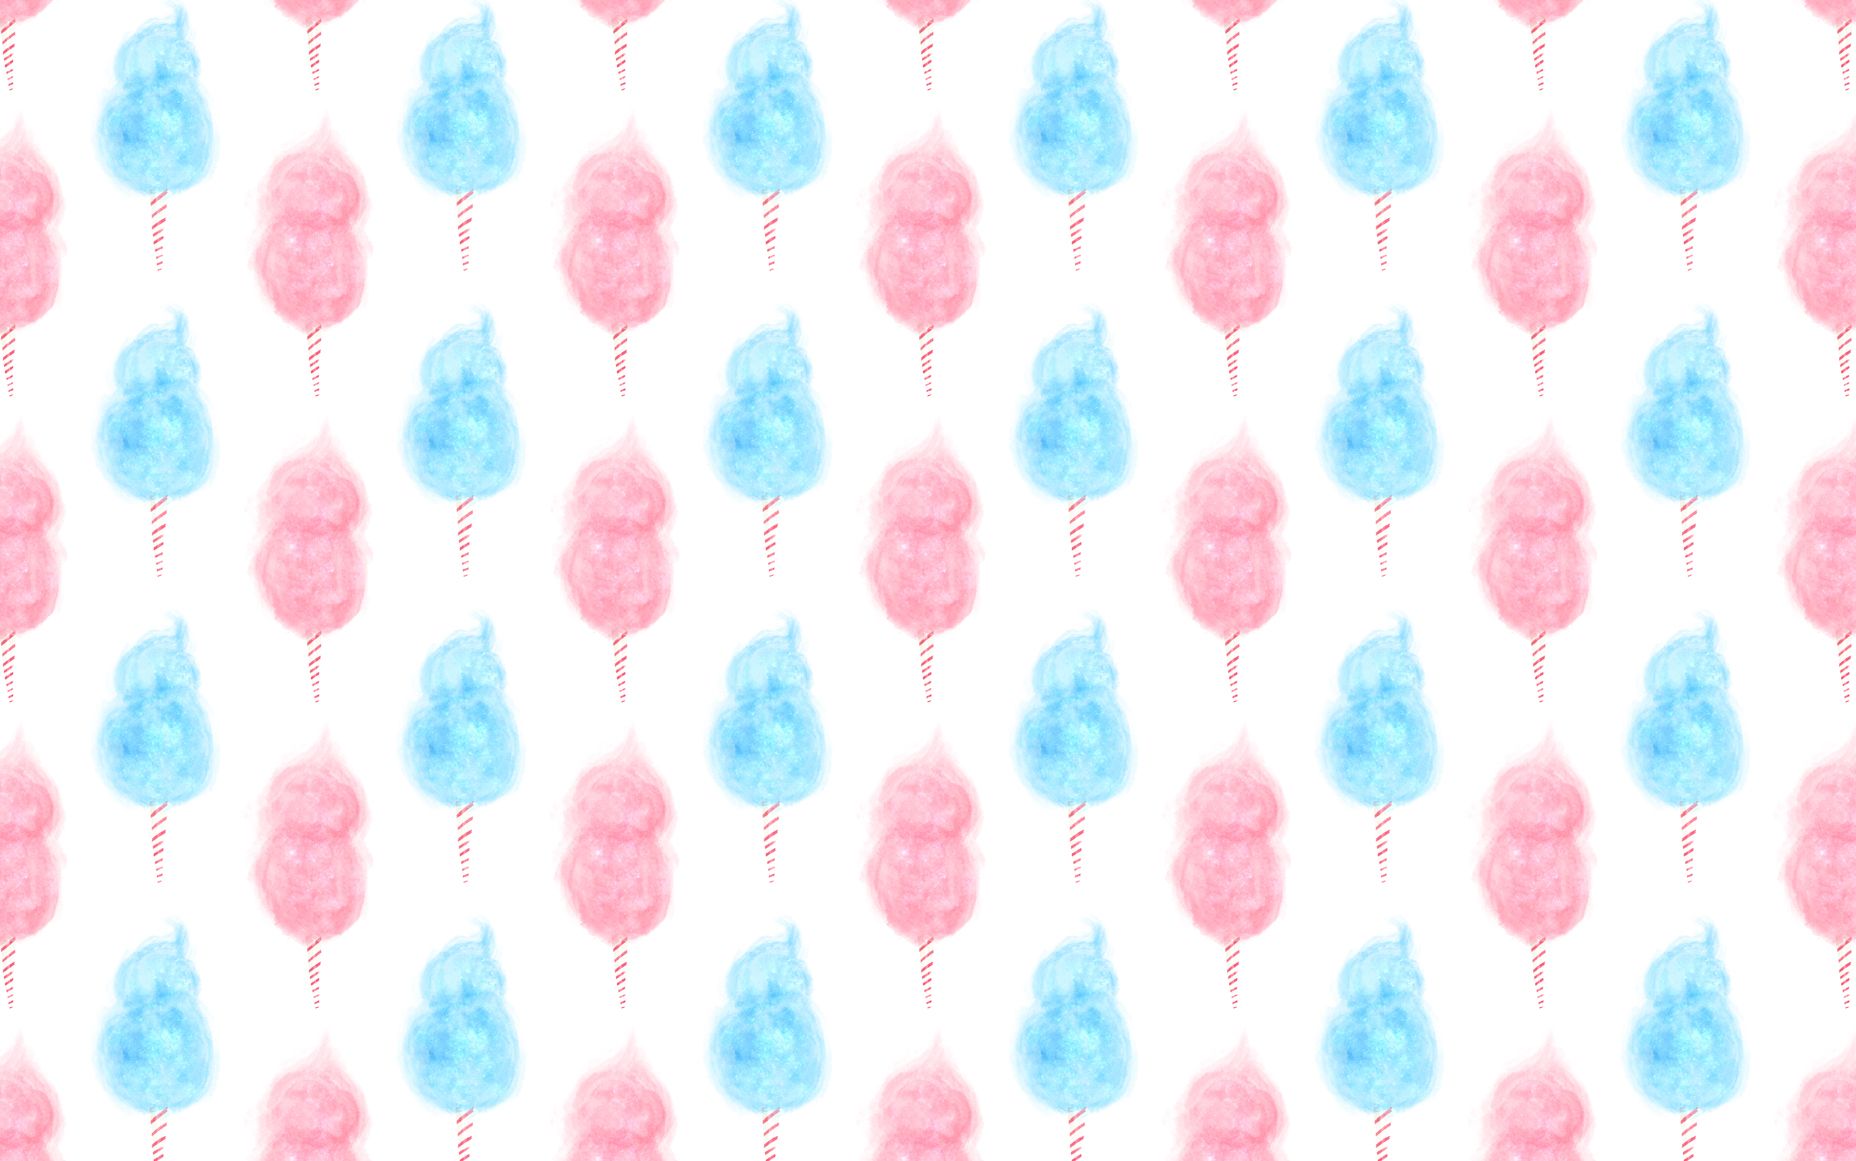 Cotton Candy Wallpaper, 44 Cotton Candy 2016 Wallpaper Pastel Desktop Background